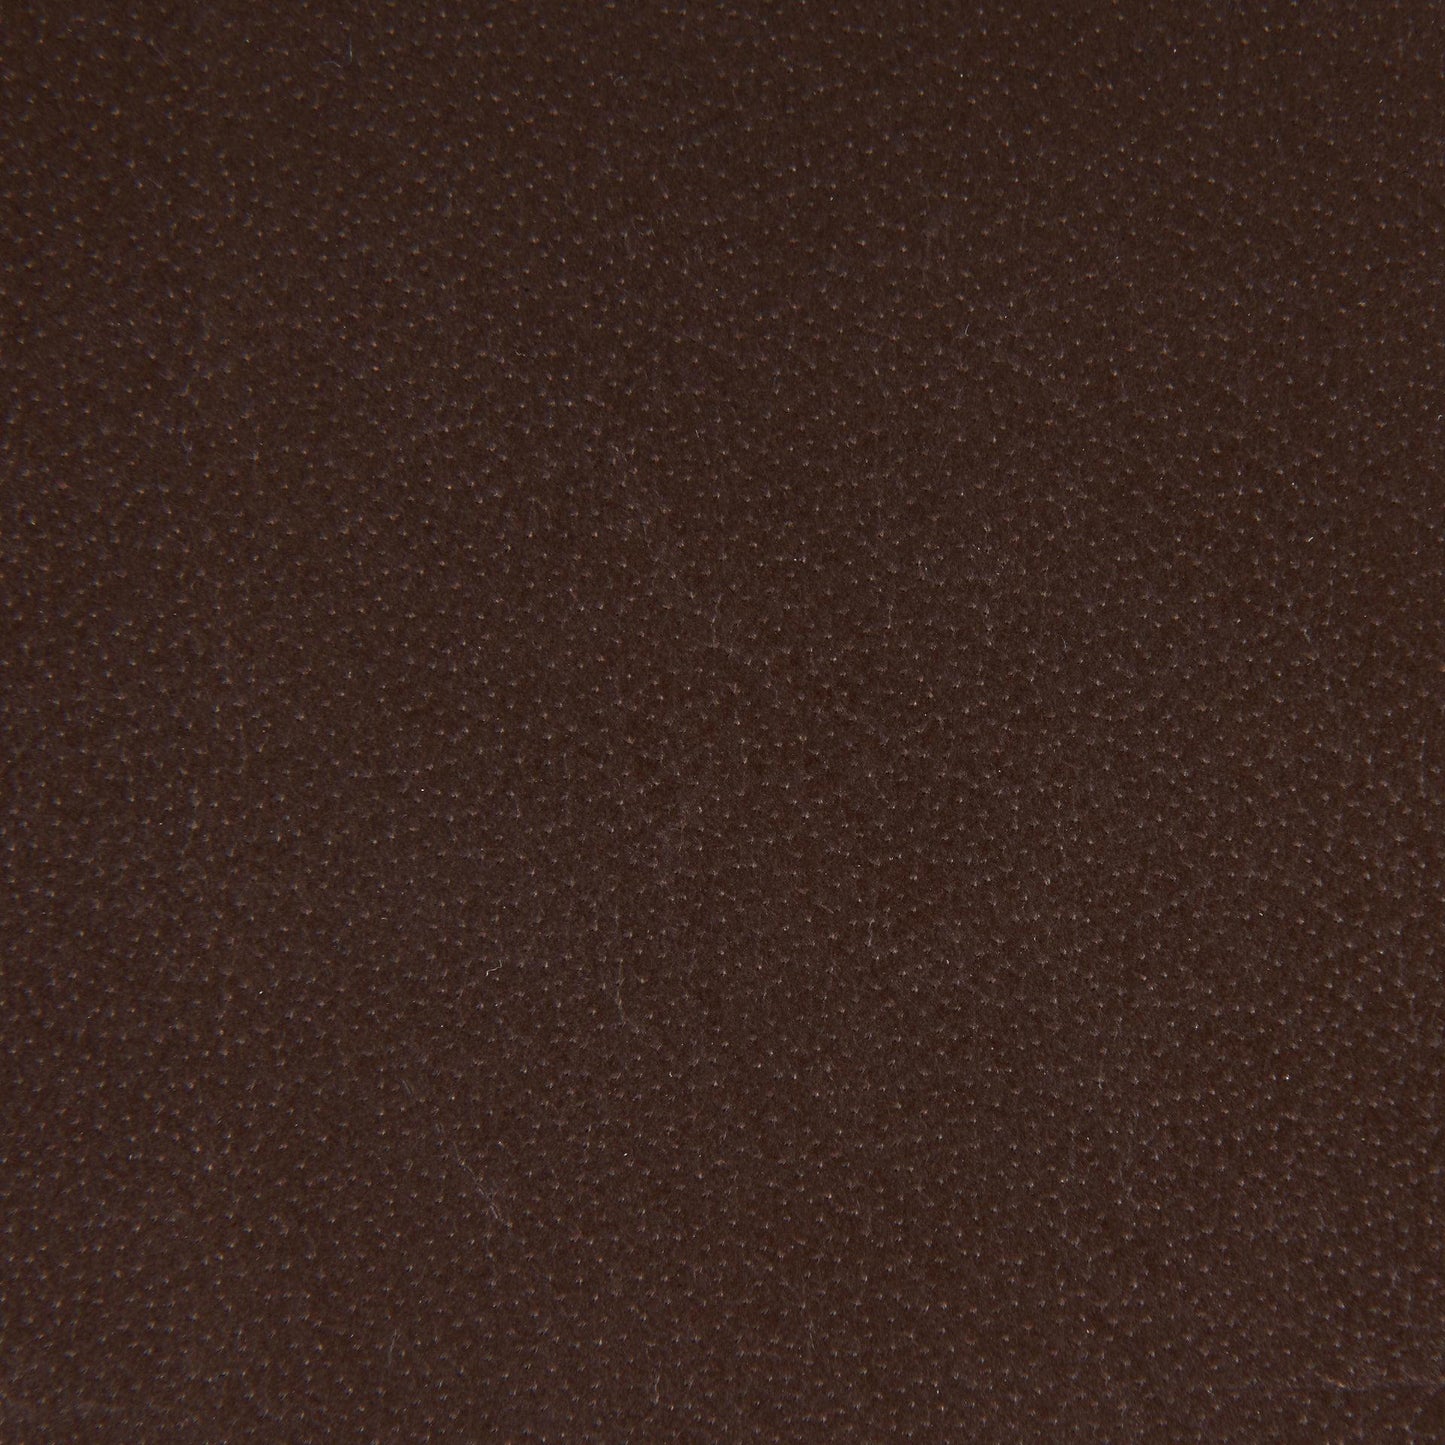 Clarissa 18.0L x 16.0W x 30.25H Dark Brown Woven Leather Seat W/ Black Metal Frame Bar Stool